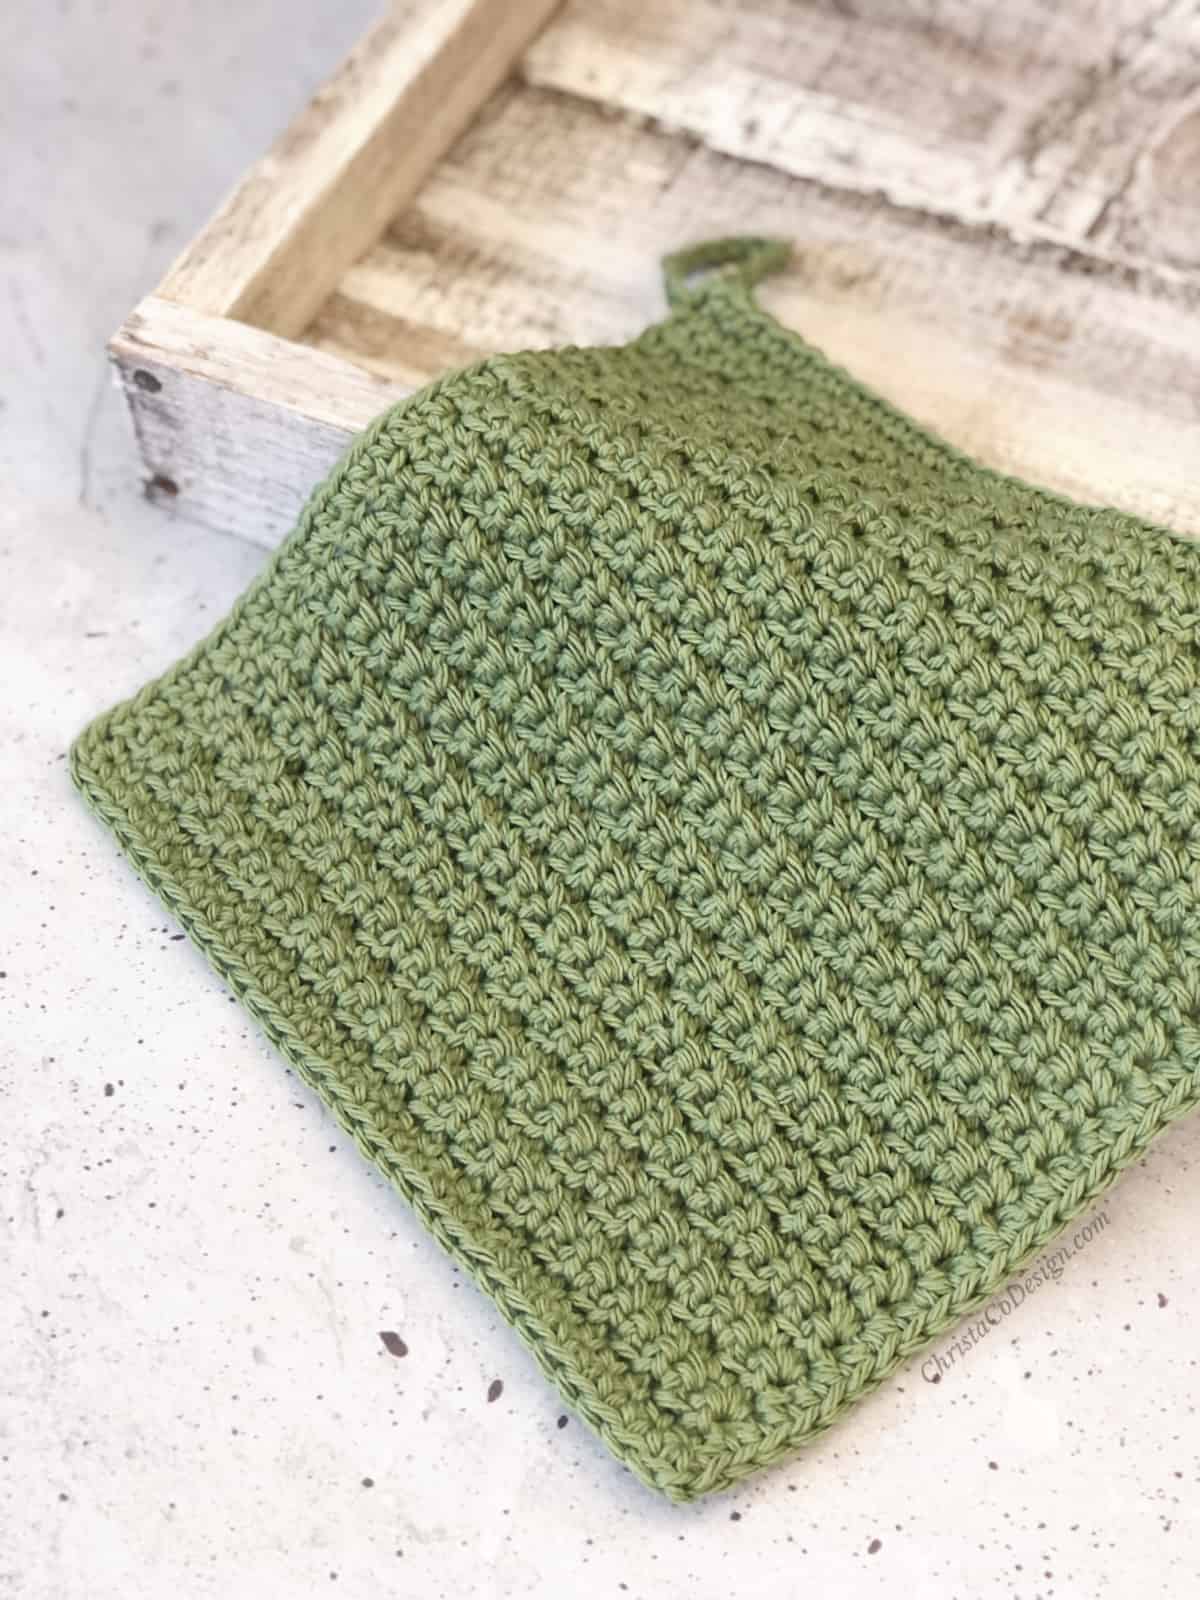 Crochet dishcloth in green on white wood block.